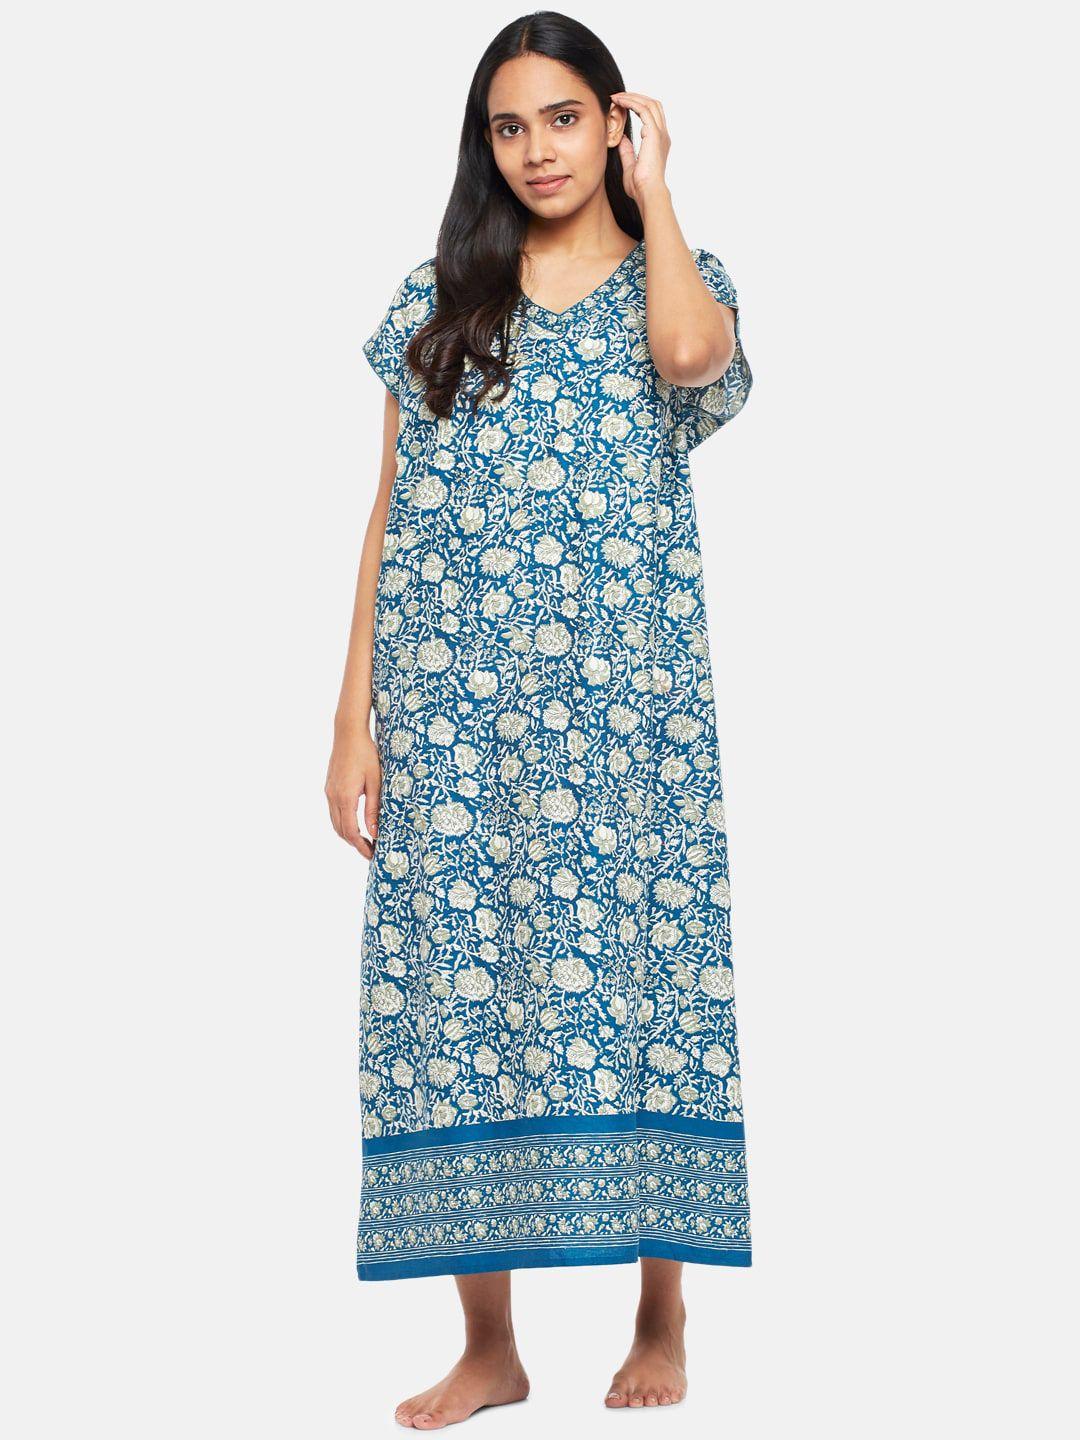 rangmanch by pantaloons blue printed cotton maxi nightdress